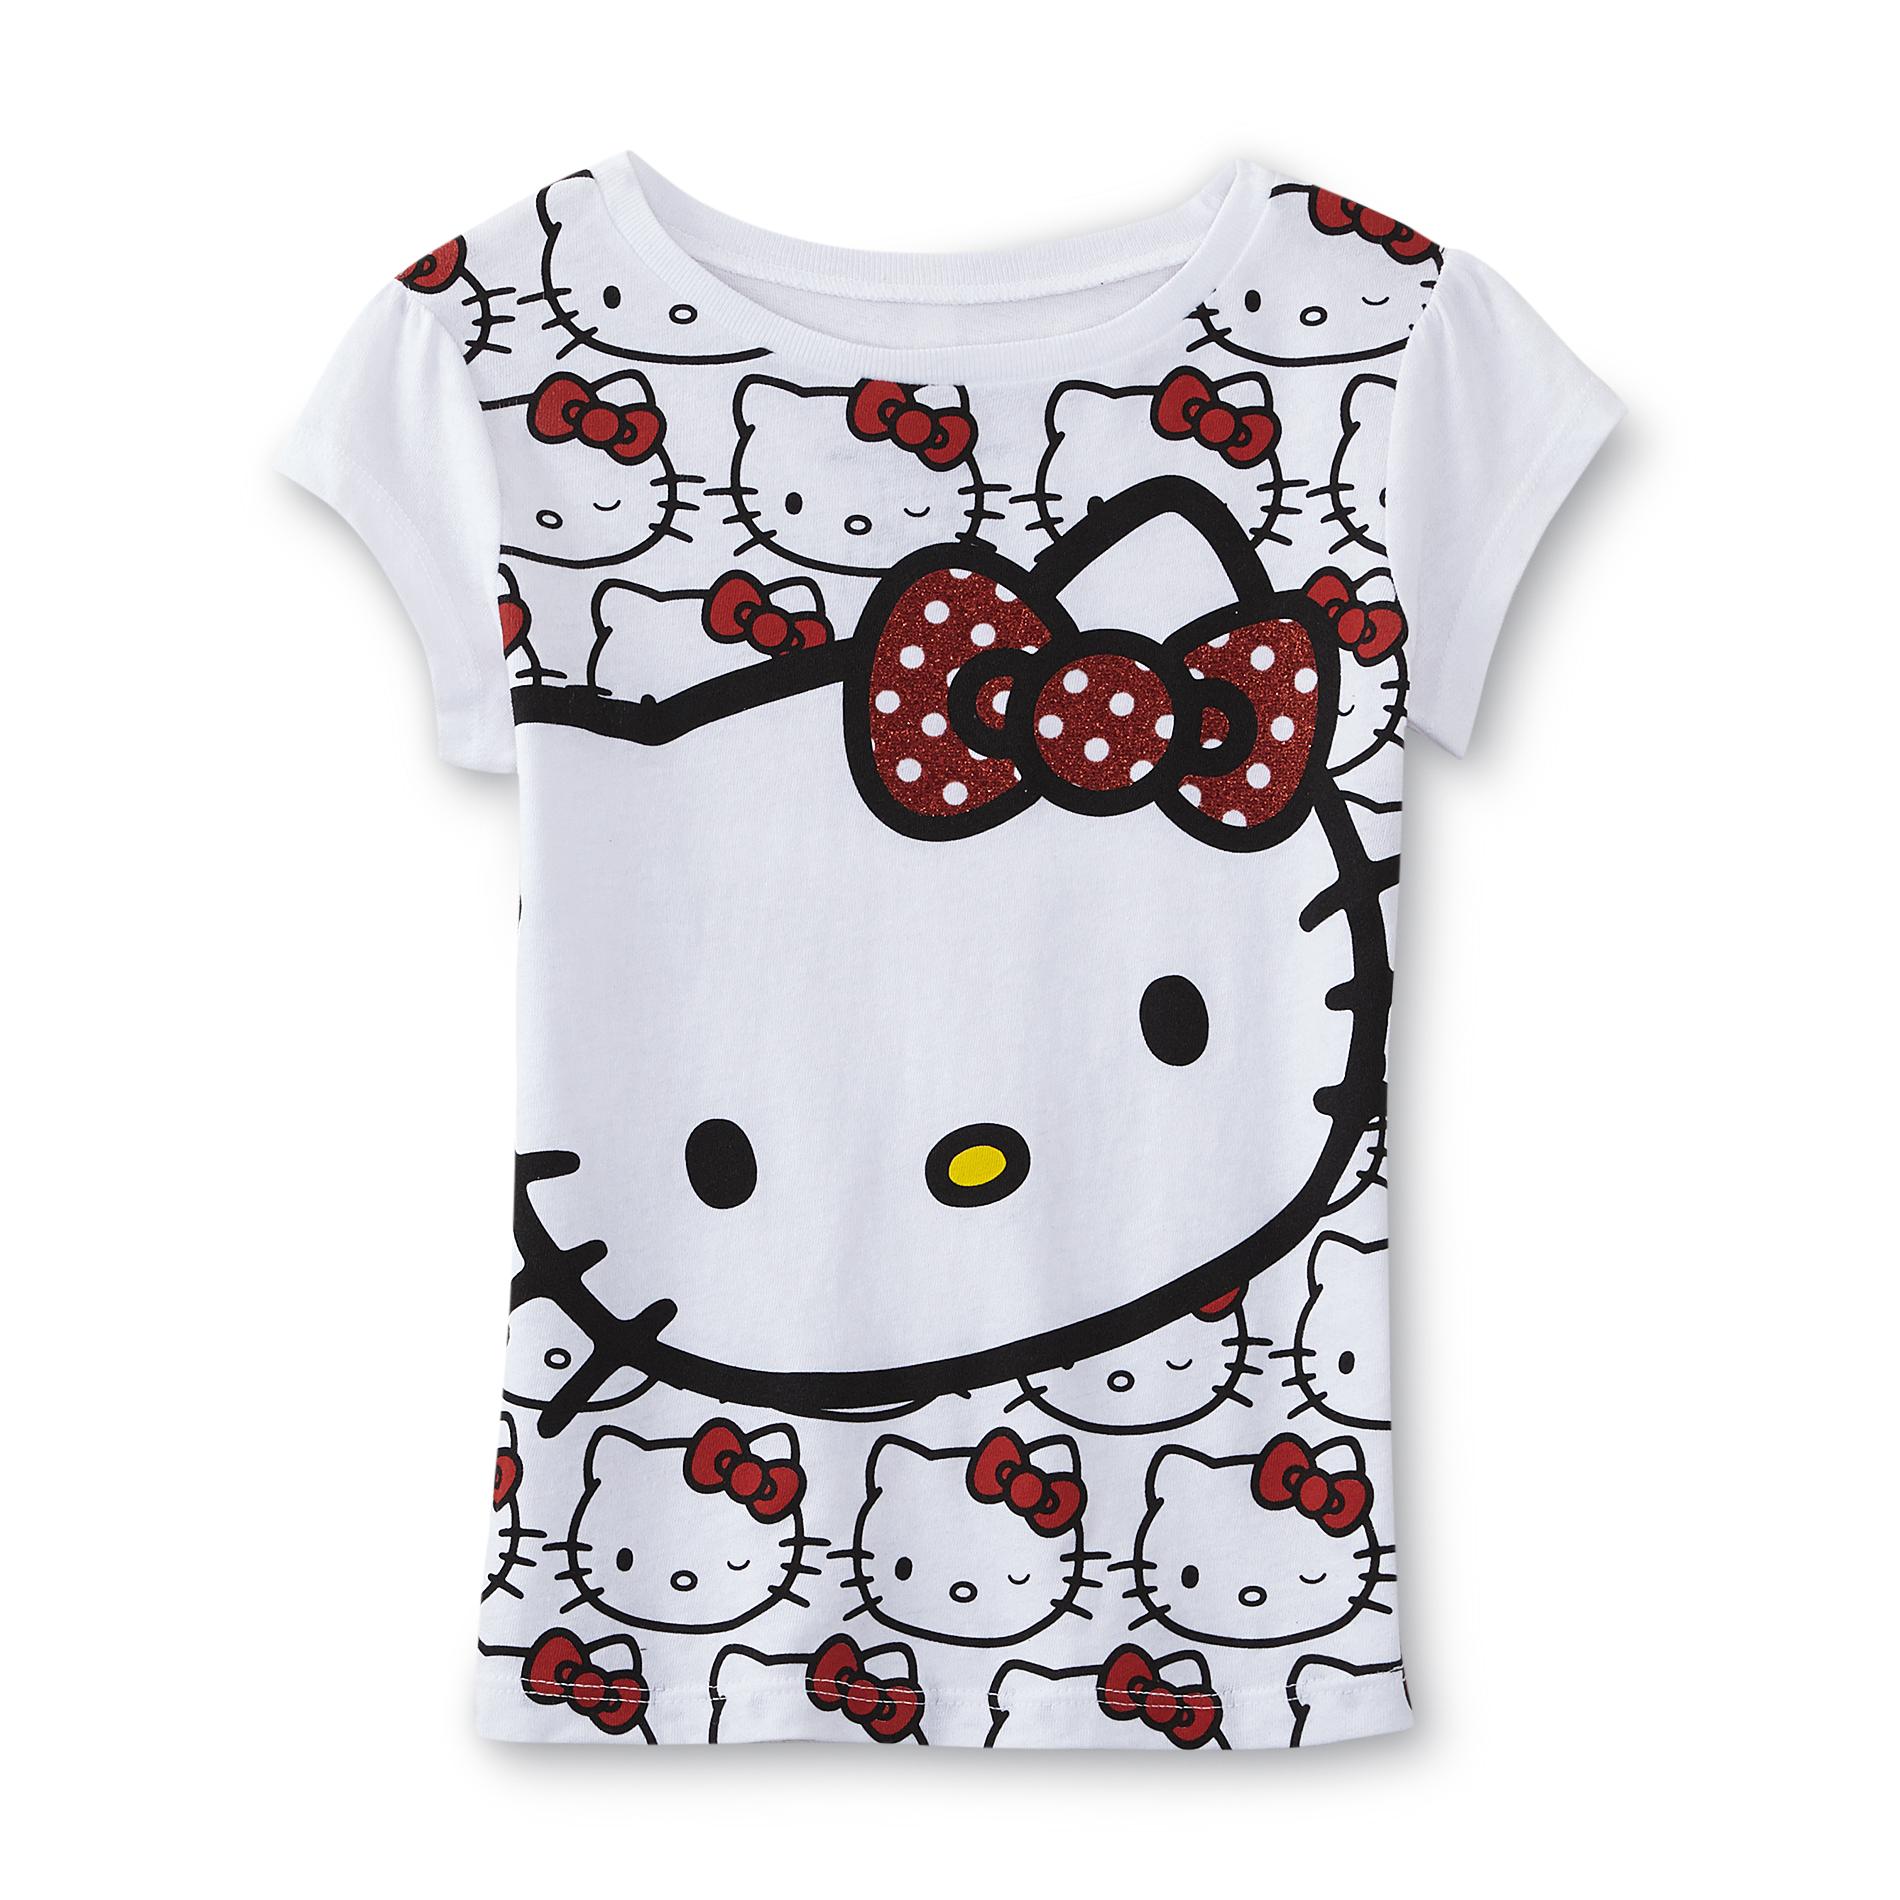 Hello Kitty Girl's Graphic T-Shirt